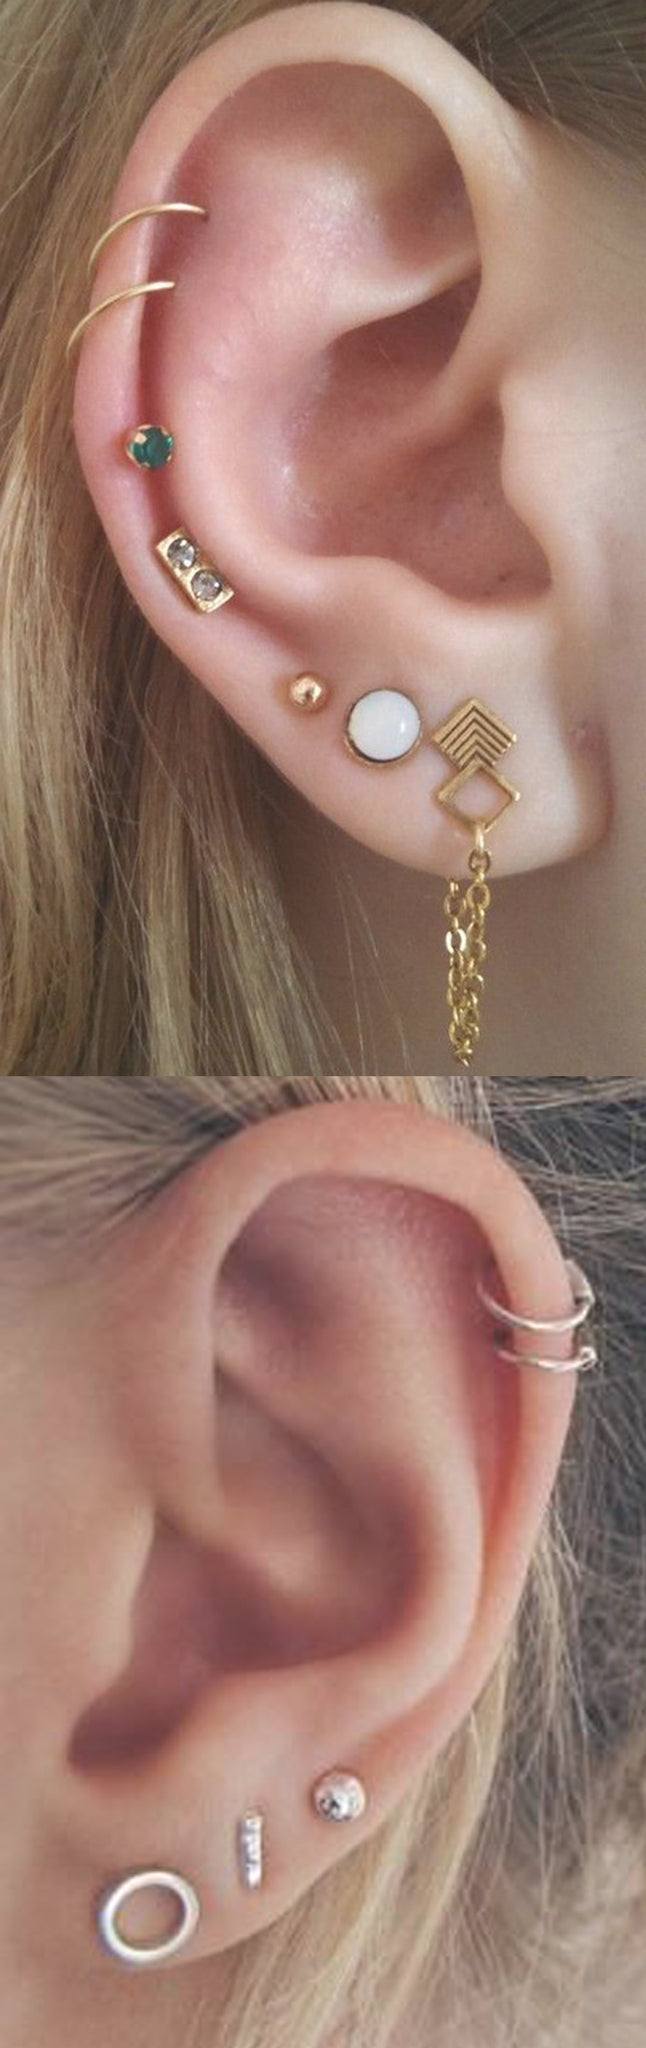 Delicate Multiple Ear Piercing Ideas Combinations - Double Cartilage Gold Ring Hoops - Simple Triple Earring Lobe Studs - MyBodiArt.com